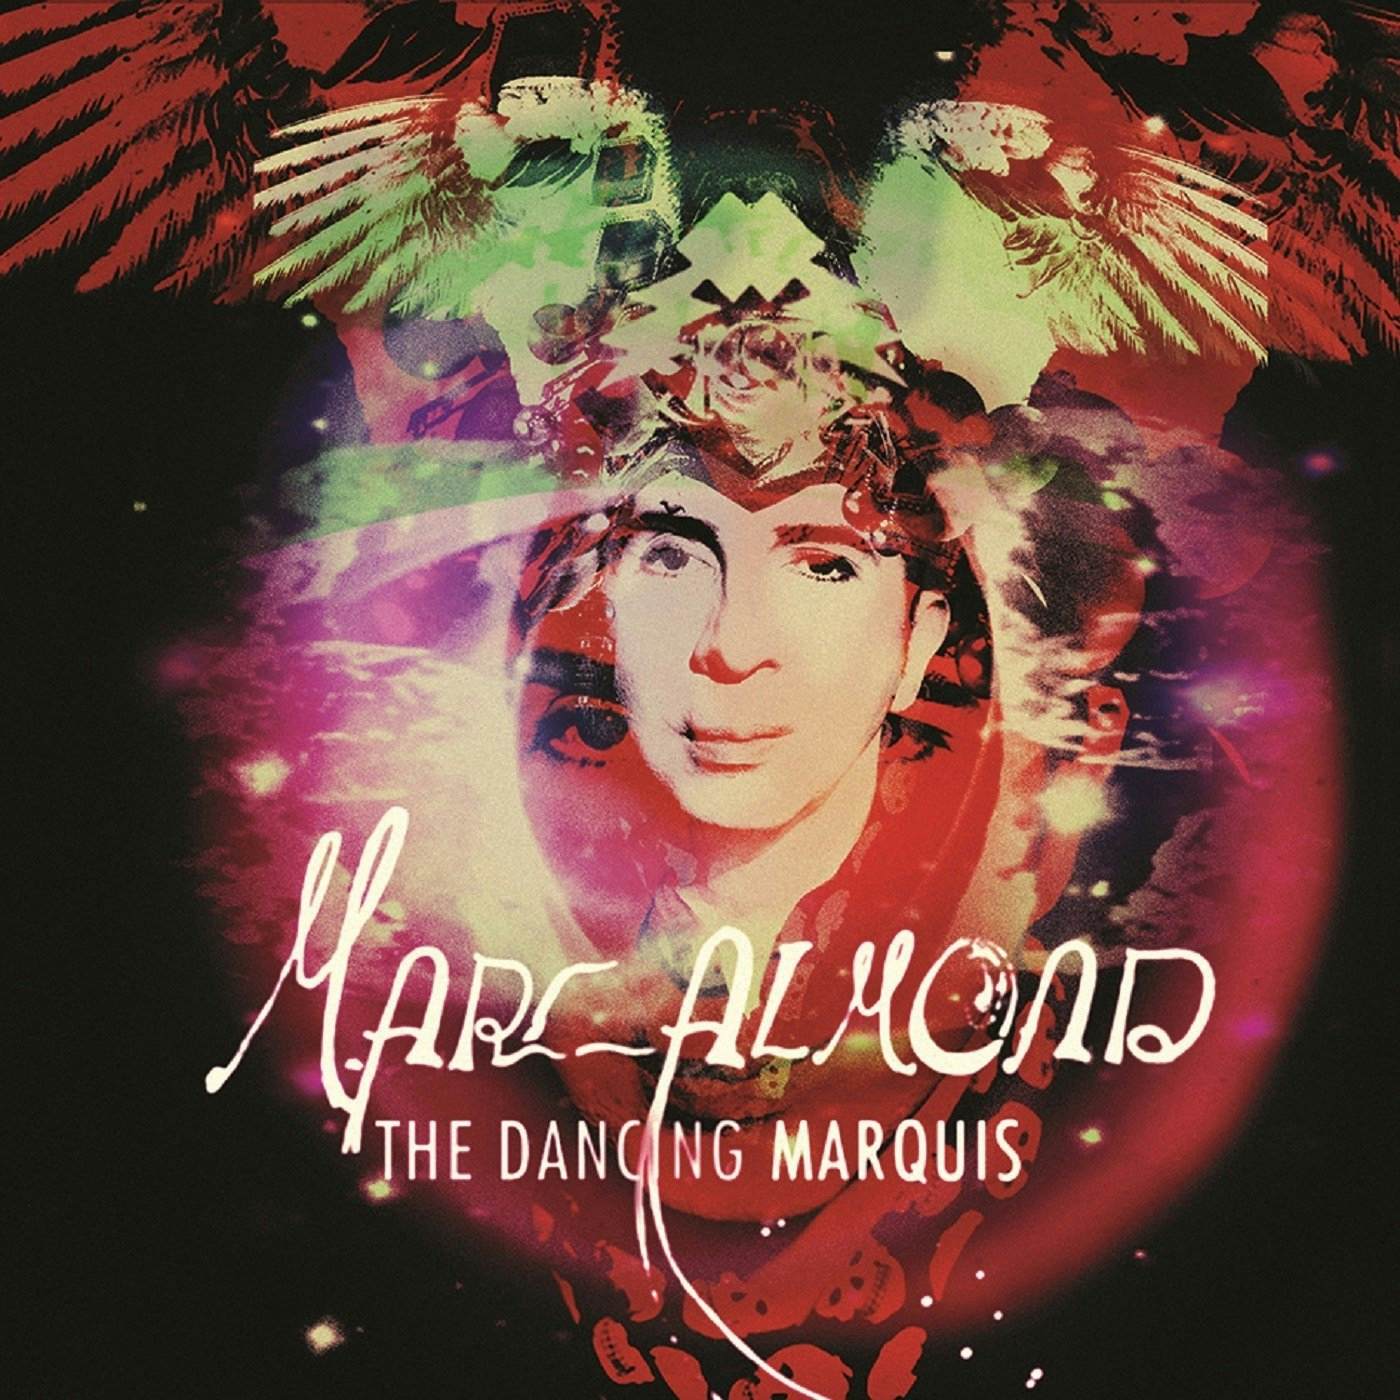 Marc Almond DANCING MARQUIS CD